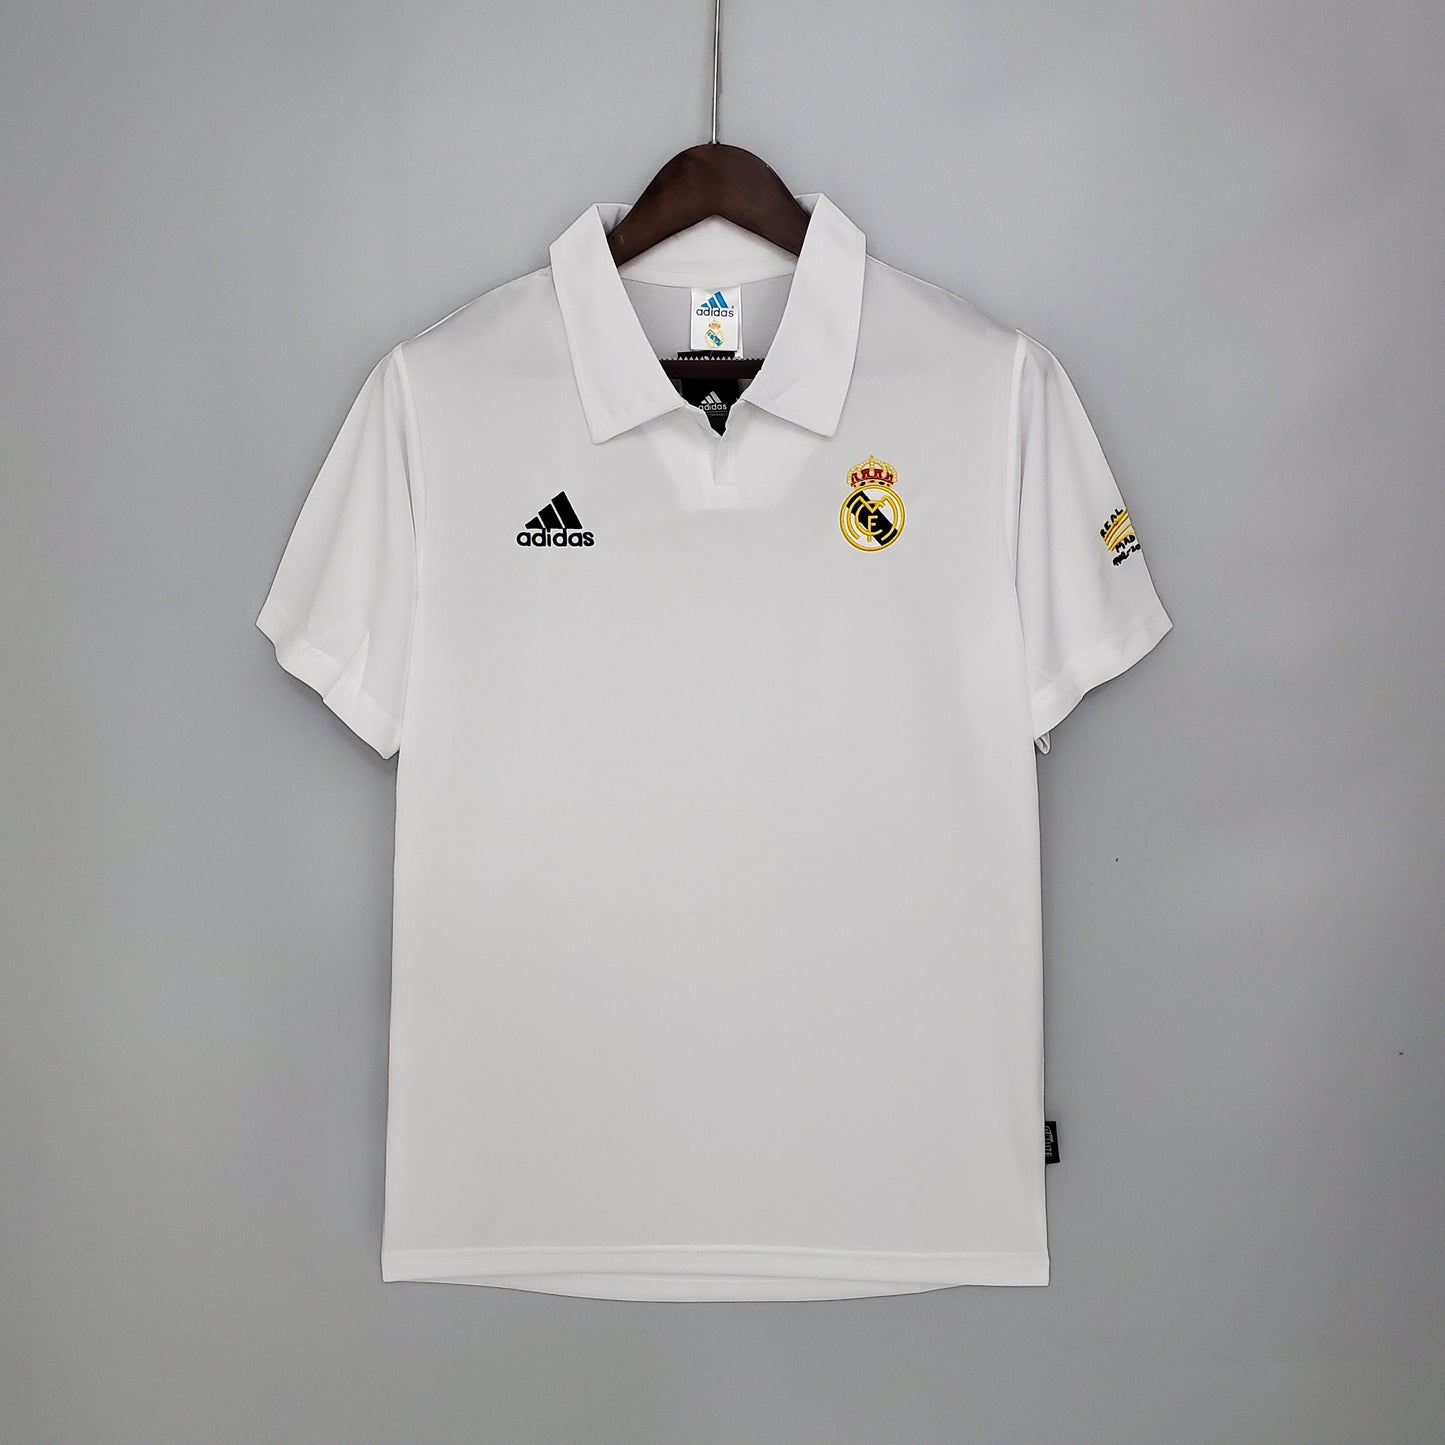 Retro Real Madrid Champions League Home Kit 02/03